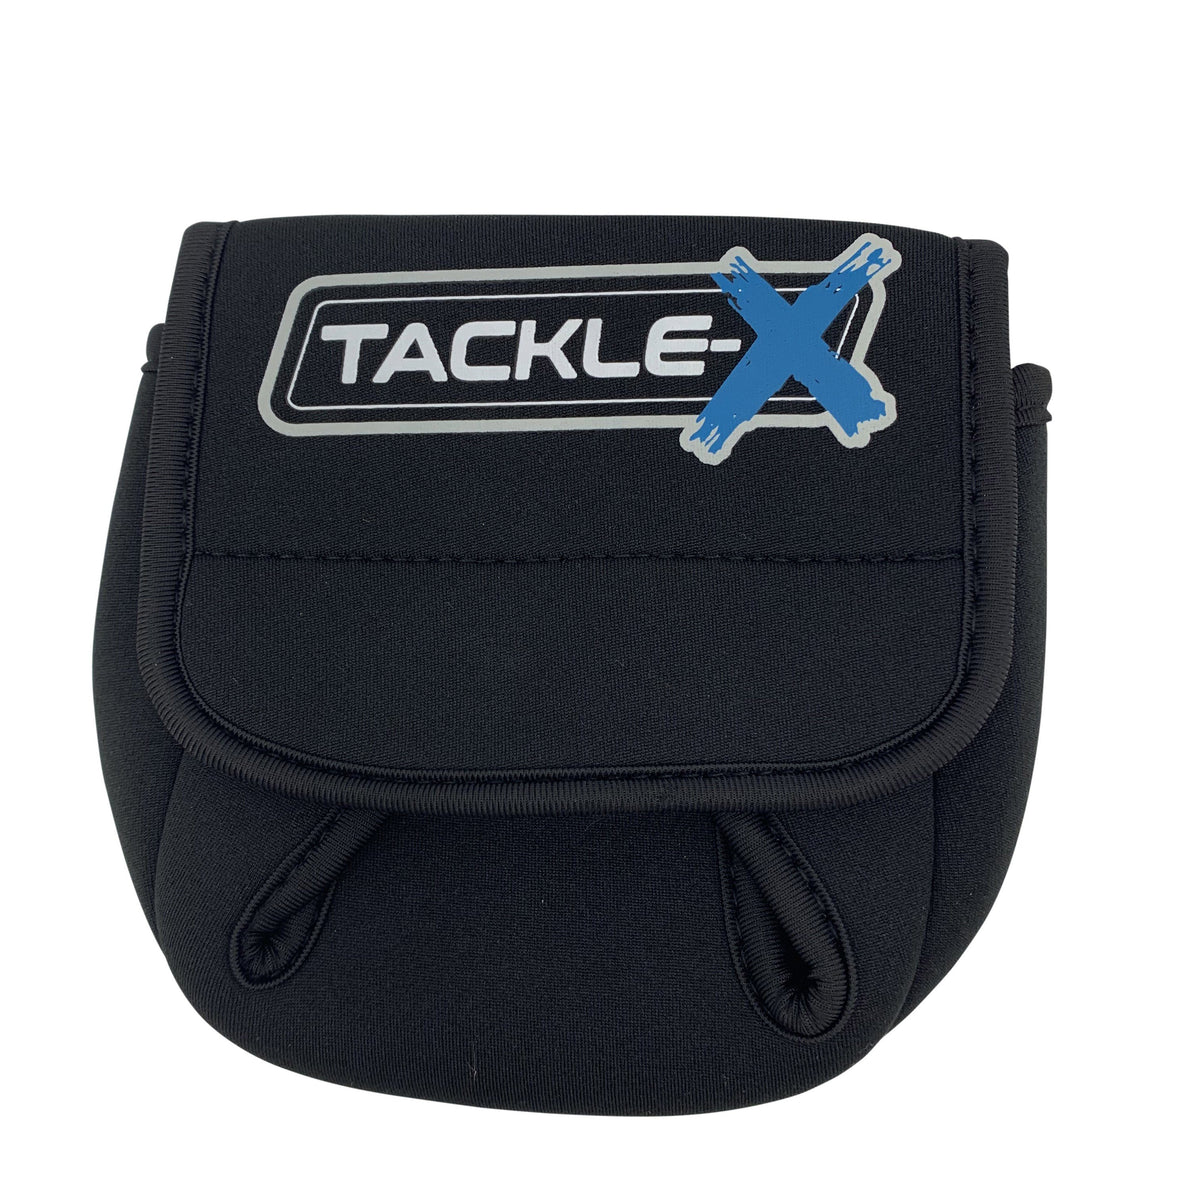 Tackle-X Neoprene Reel Covers